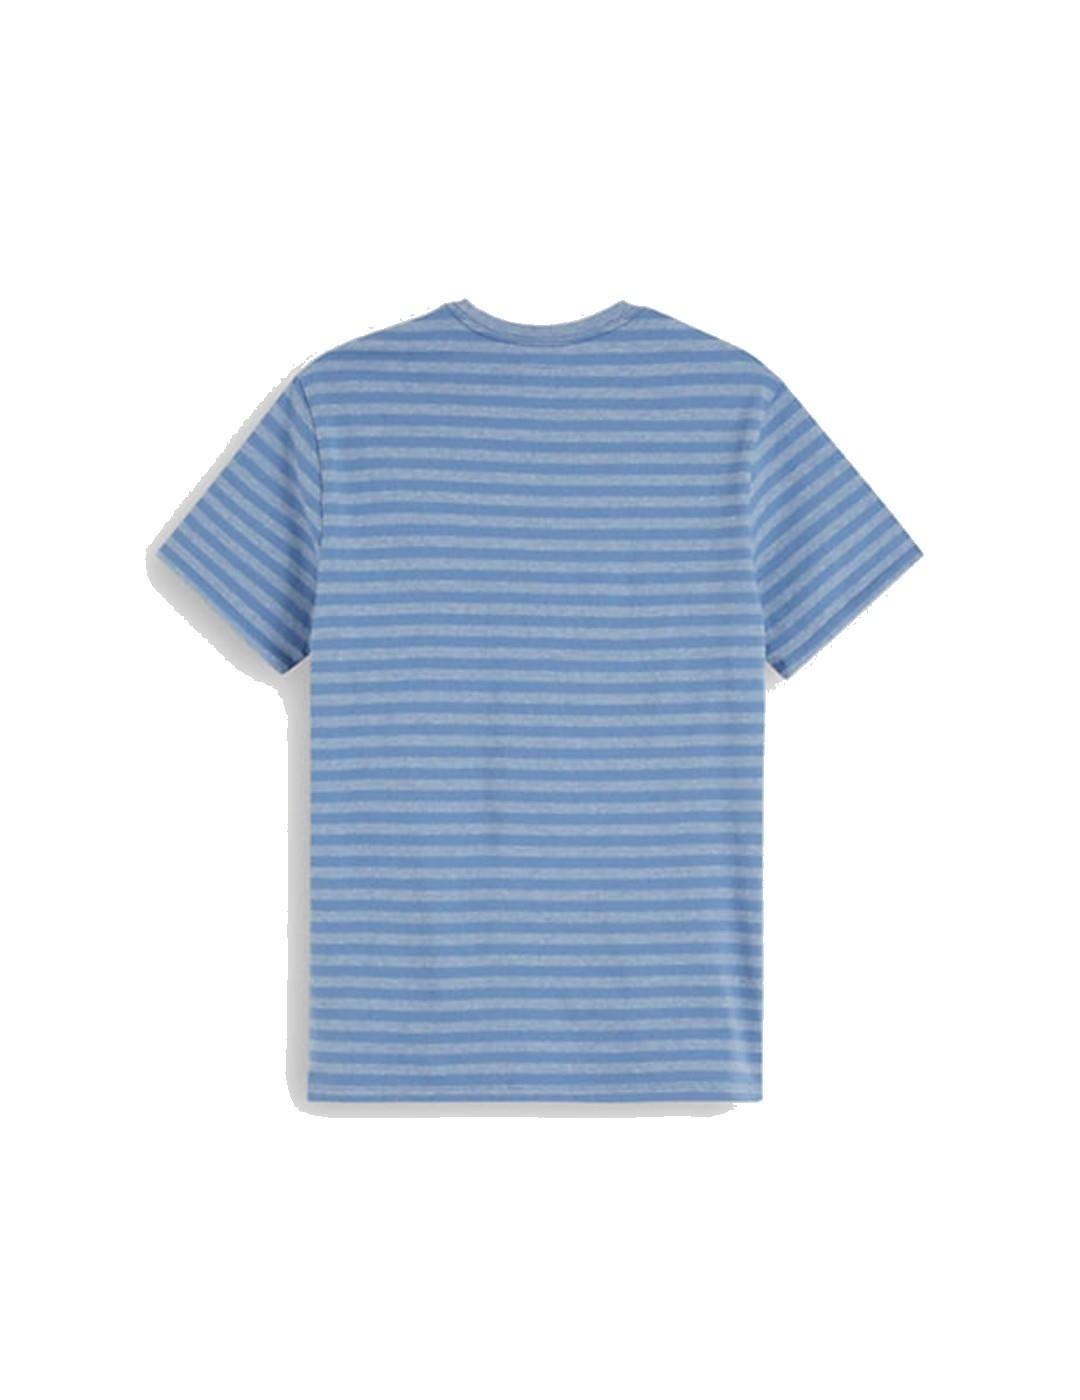 Camiseta Levi's hm tee sleek azul para hombre -a